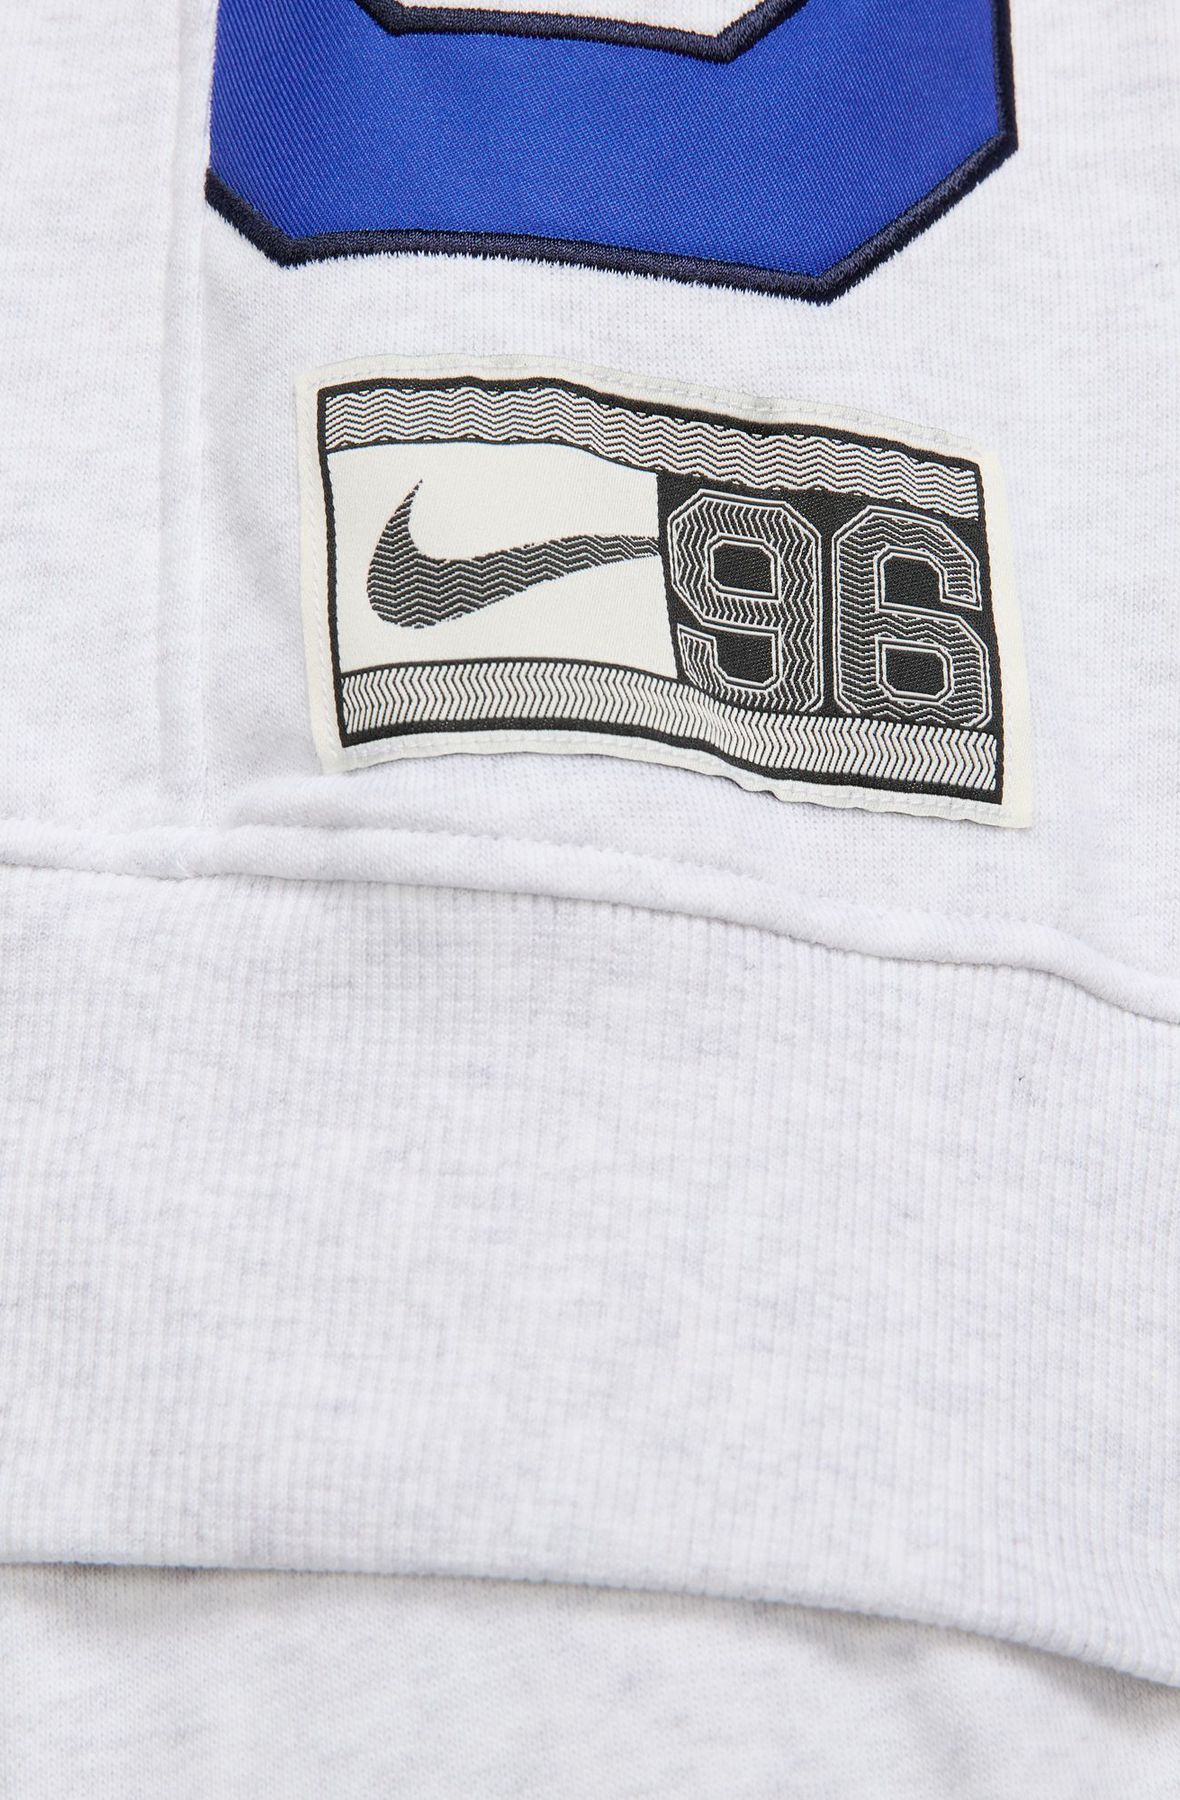 Women's Nike Sportswear Circa 96 Outfit